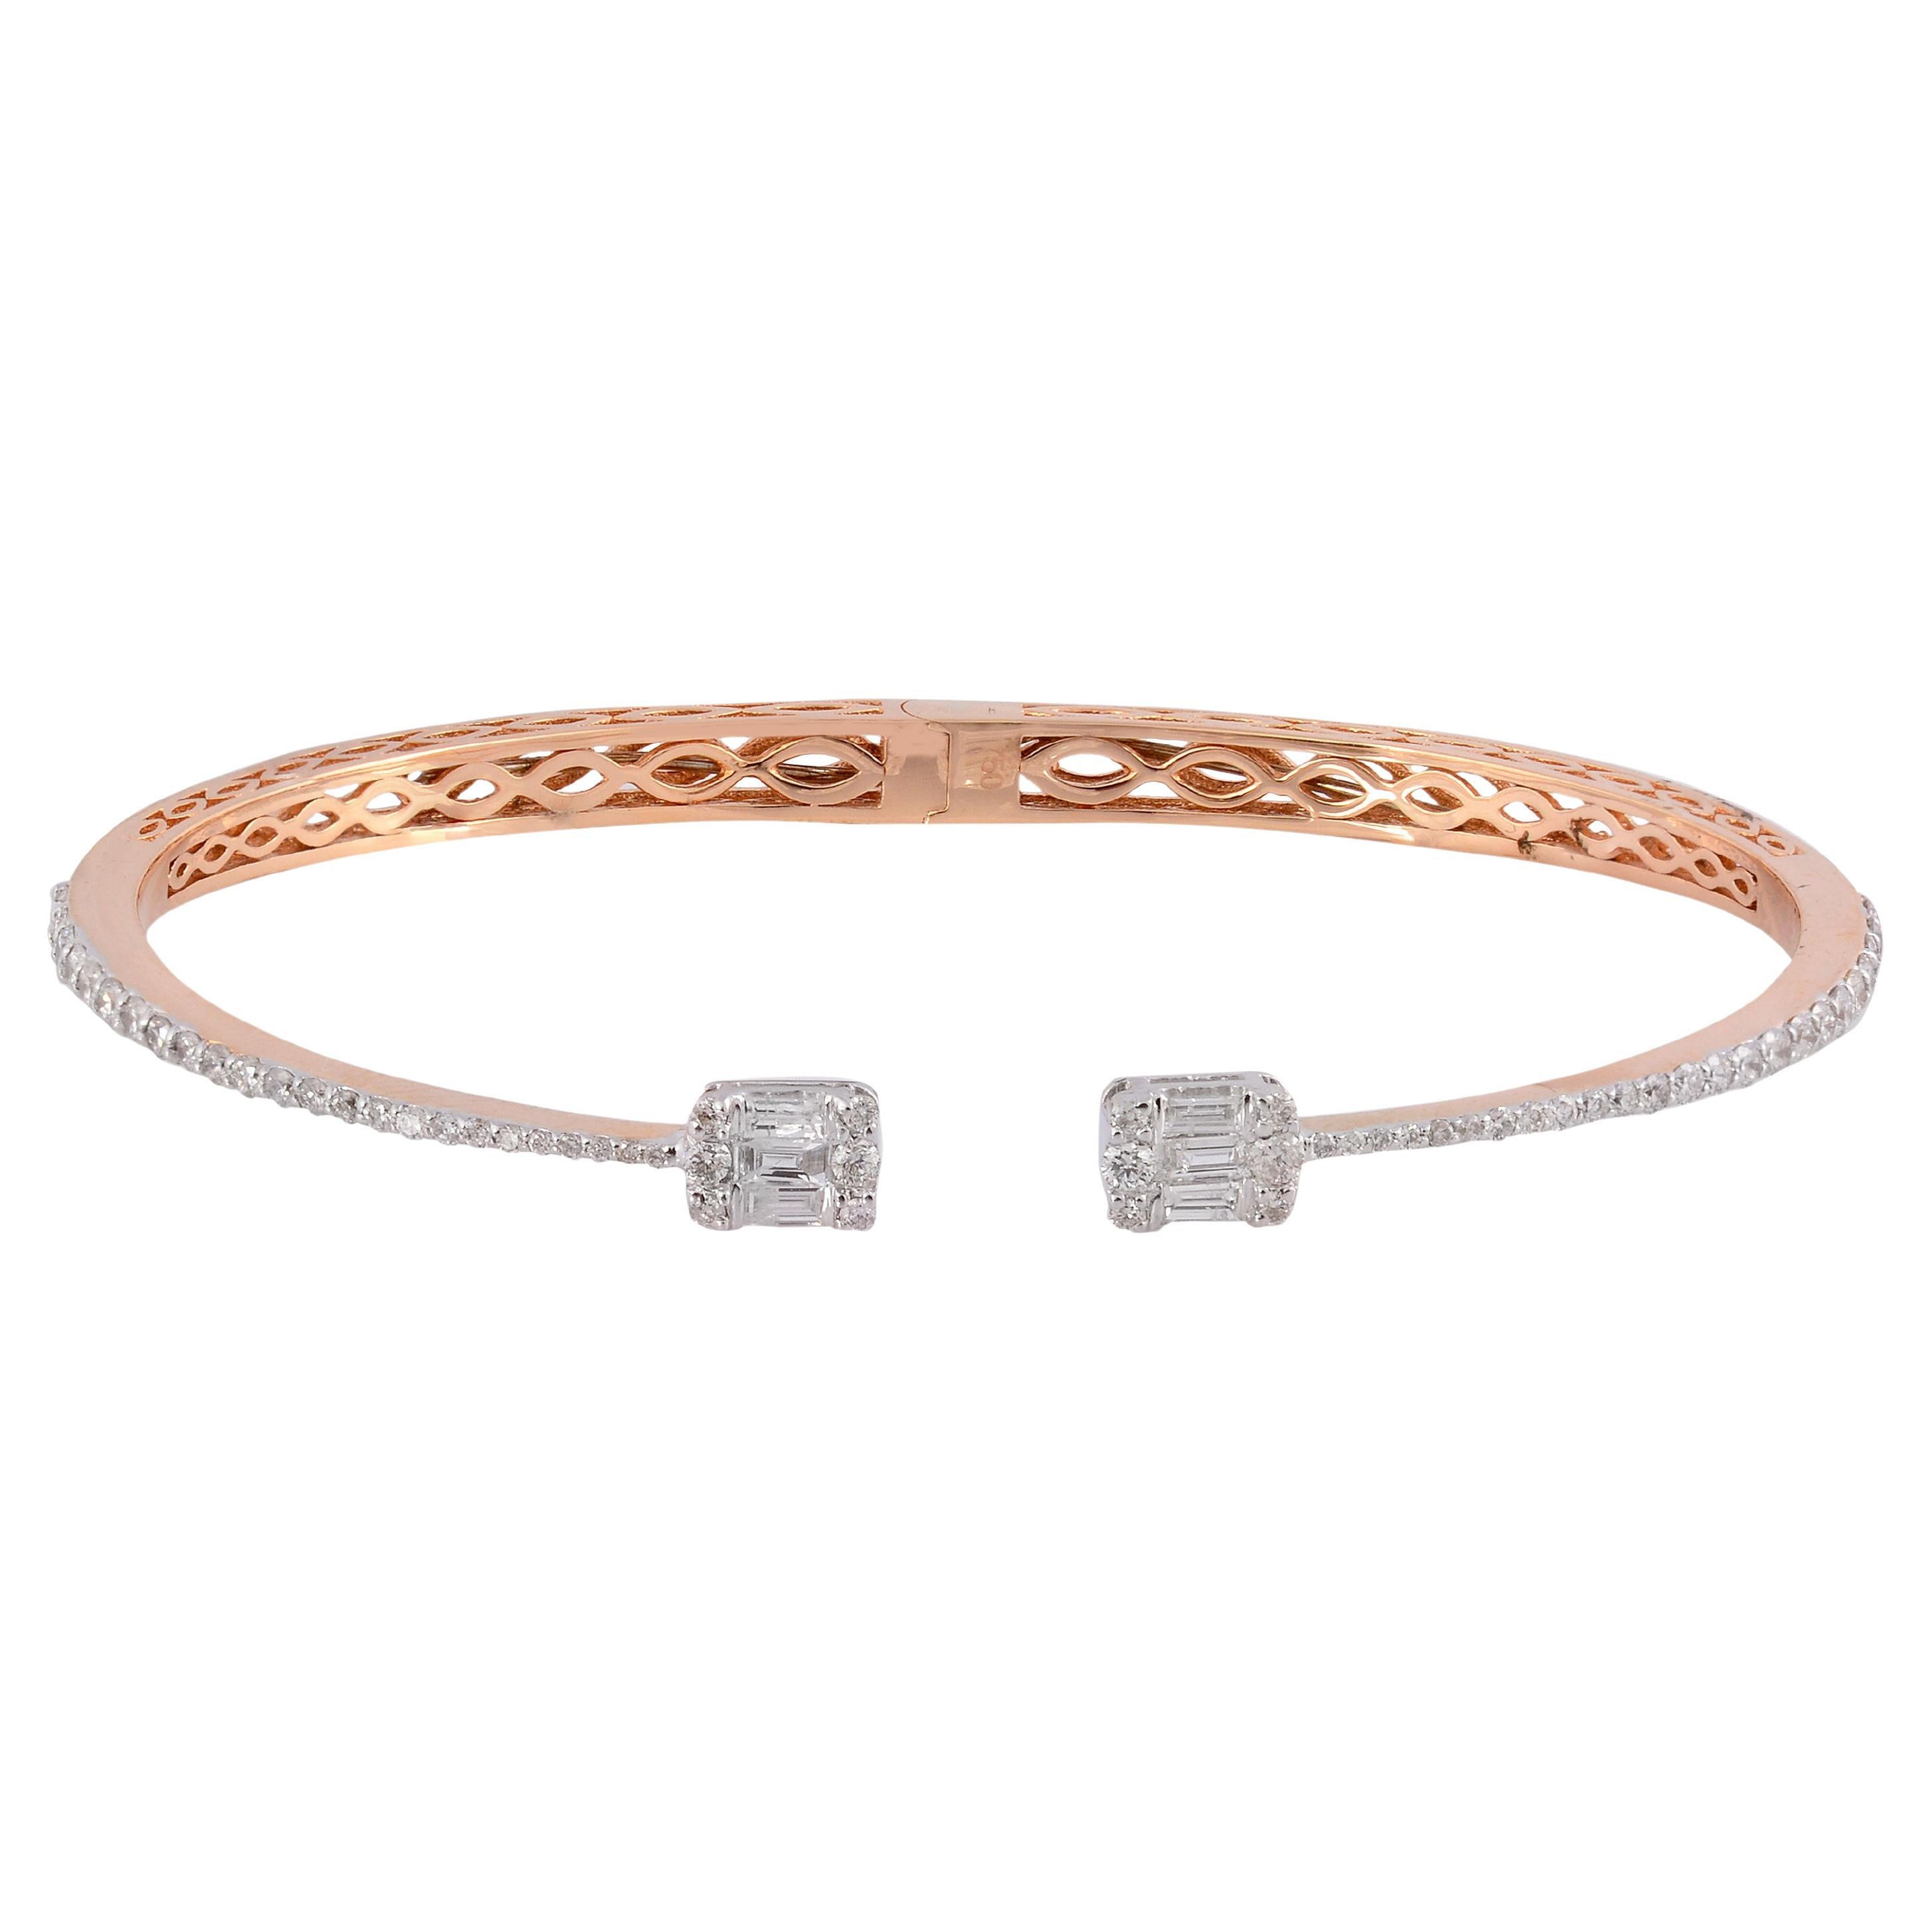 SI Clarity HI Color Baguette Diamond Cuff Bangle Bracelet 18 Karat Rose Gold For Sale